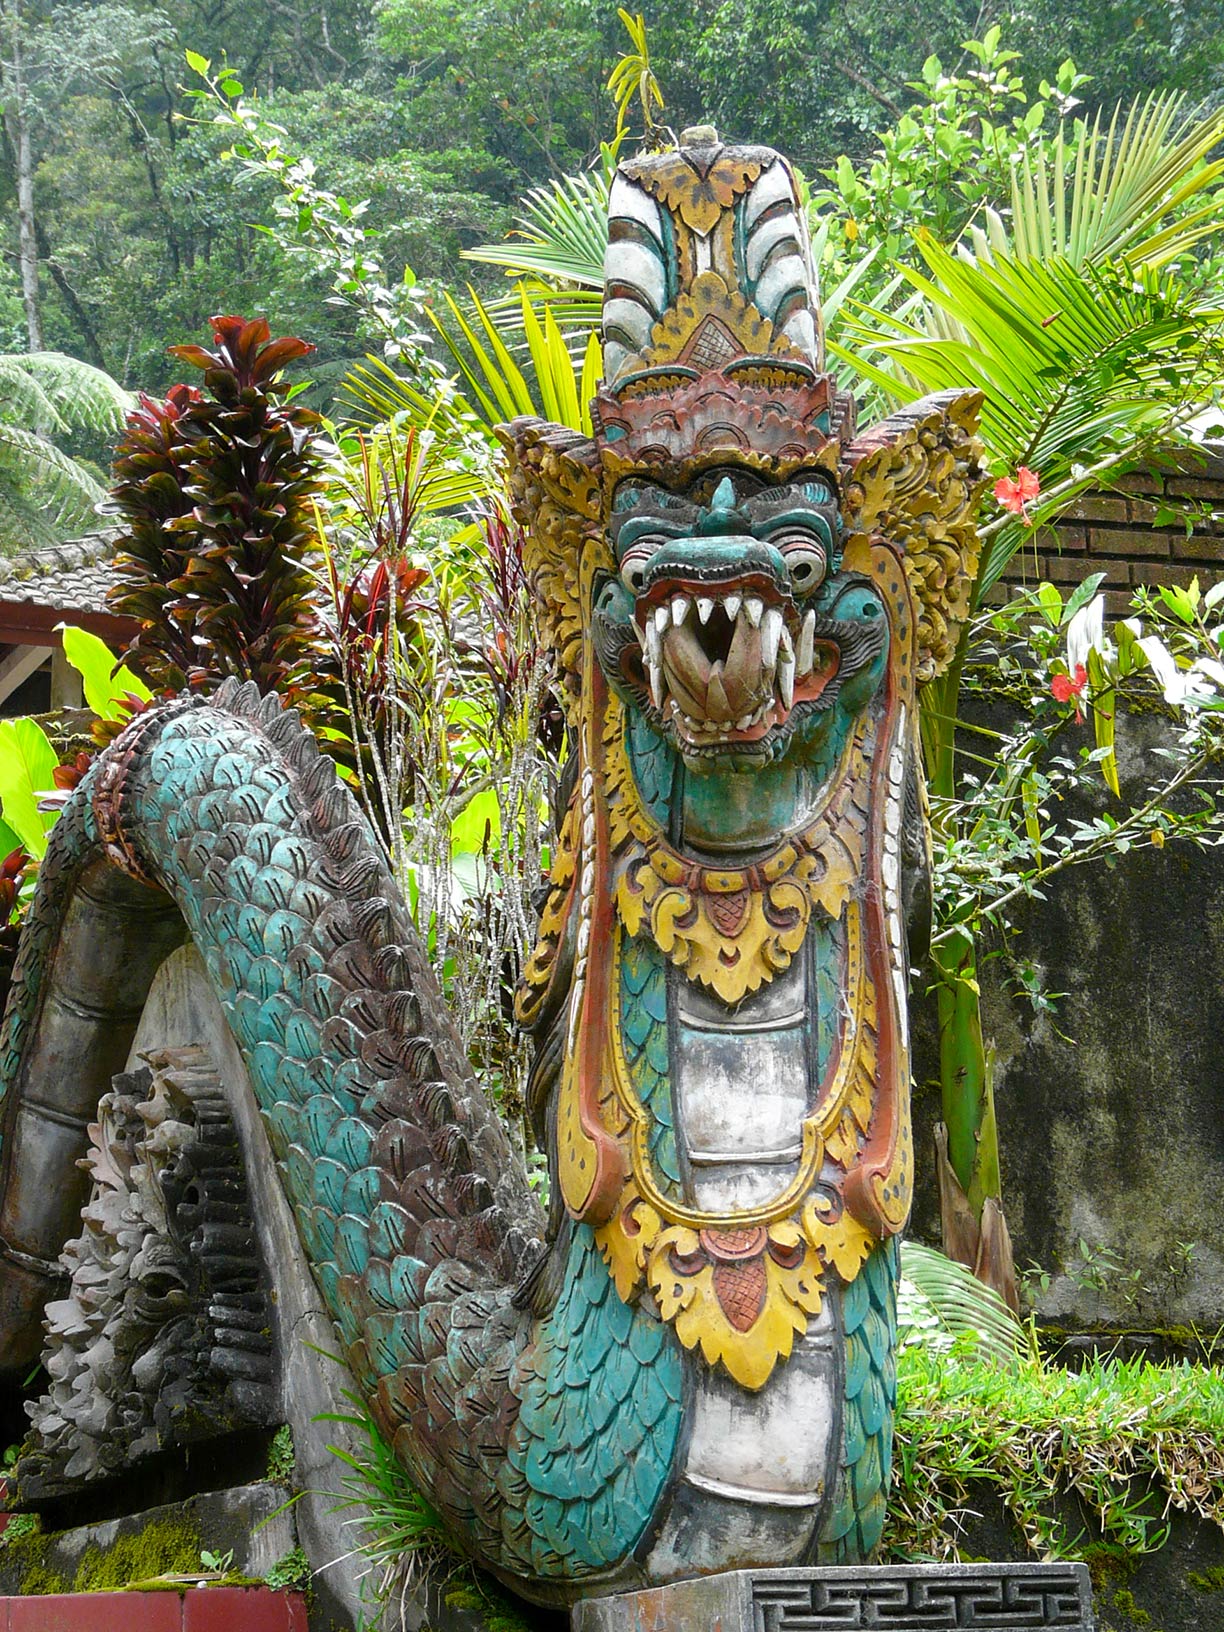 Indonesian Naga, a magical serpent in Southeast Asia